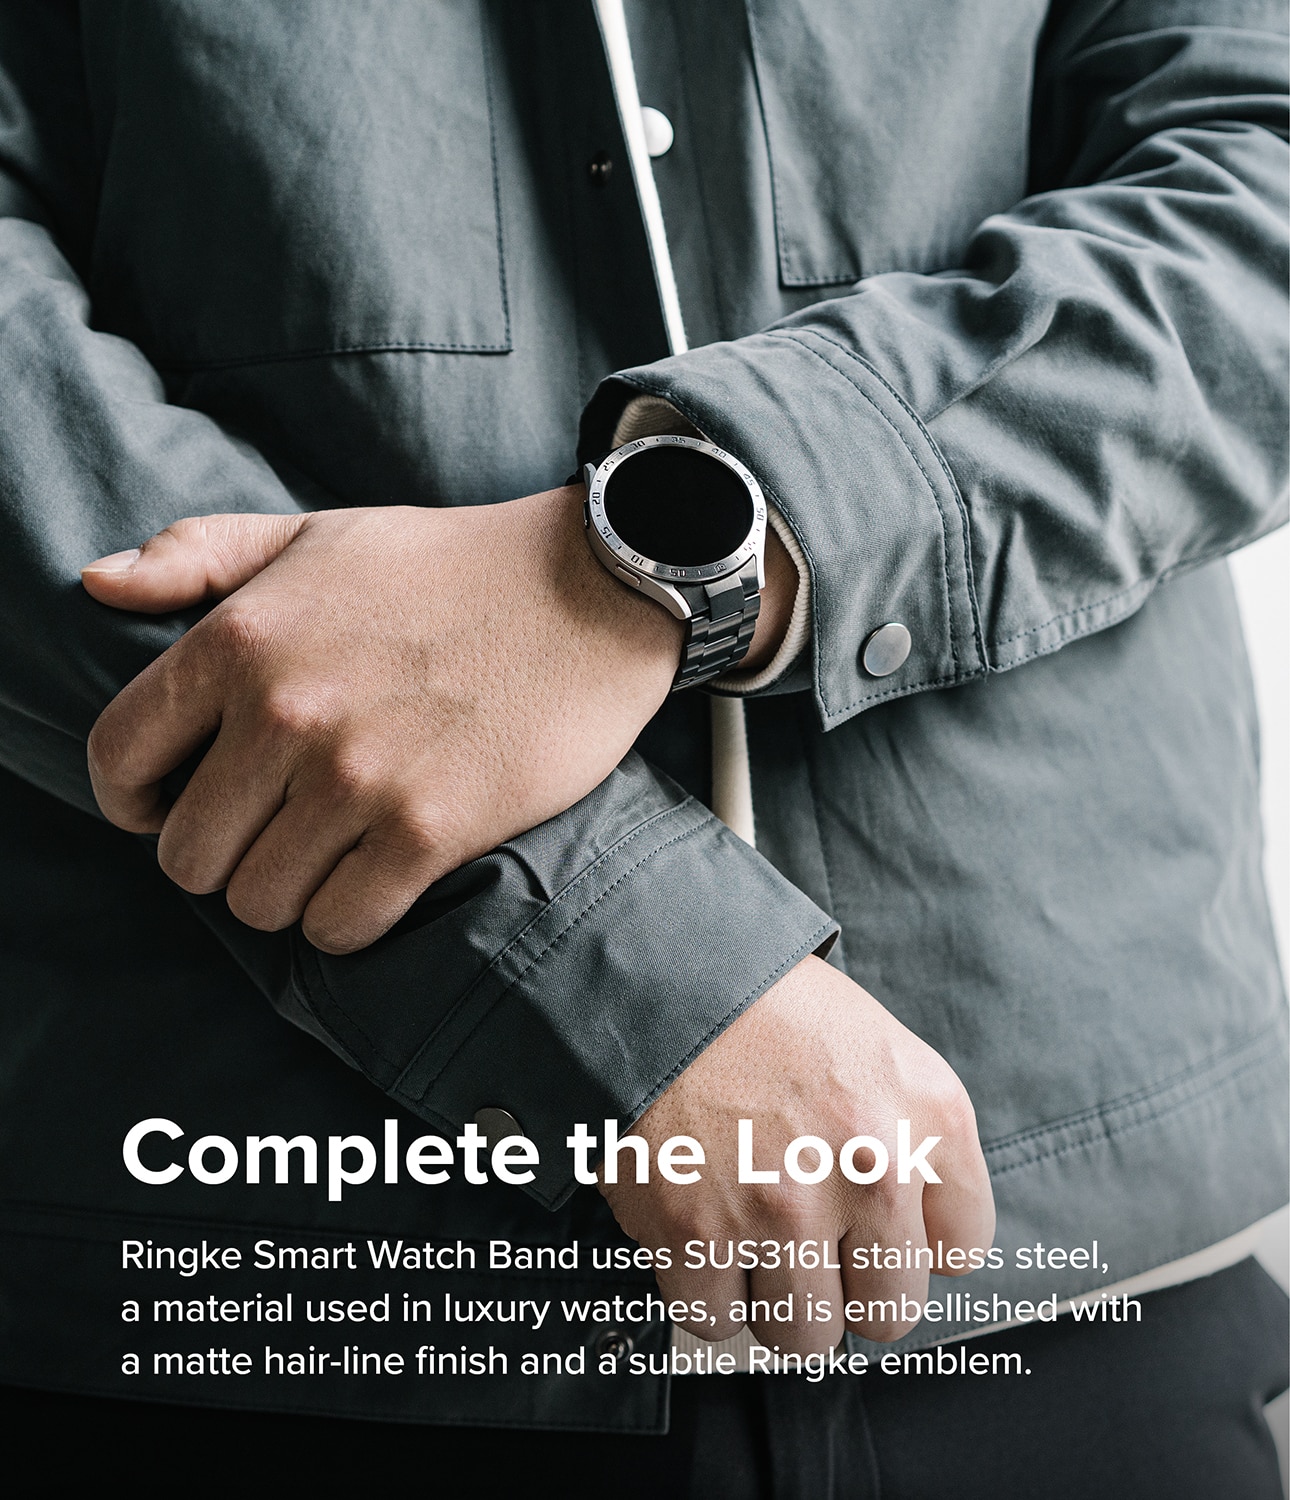 Metal One Armband Samsung Galaxy Watch 4/5 40mm Black